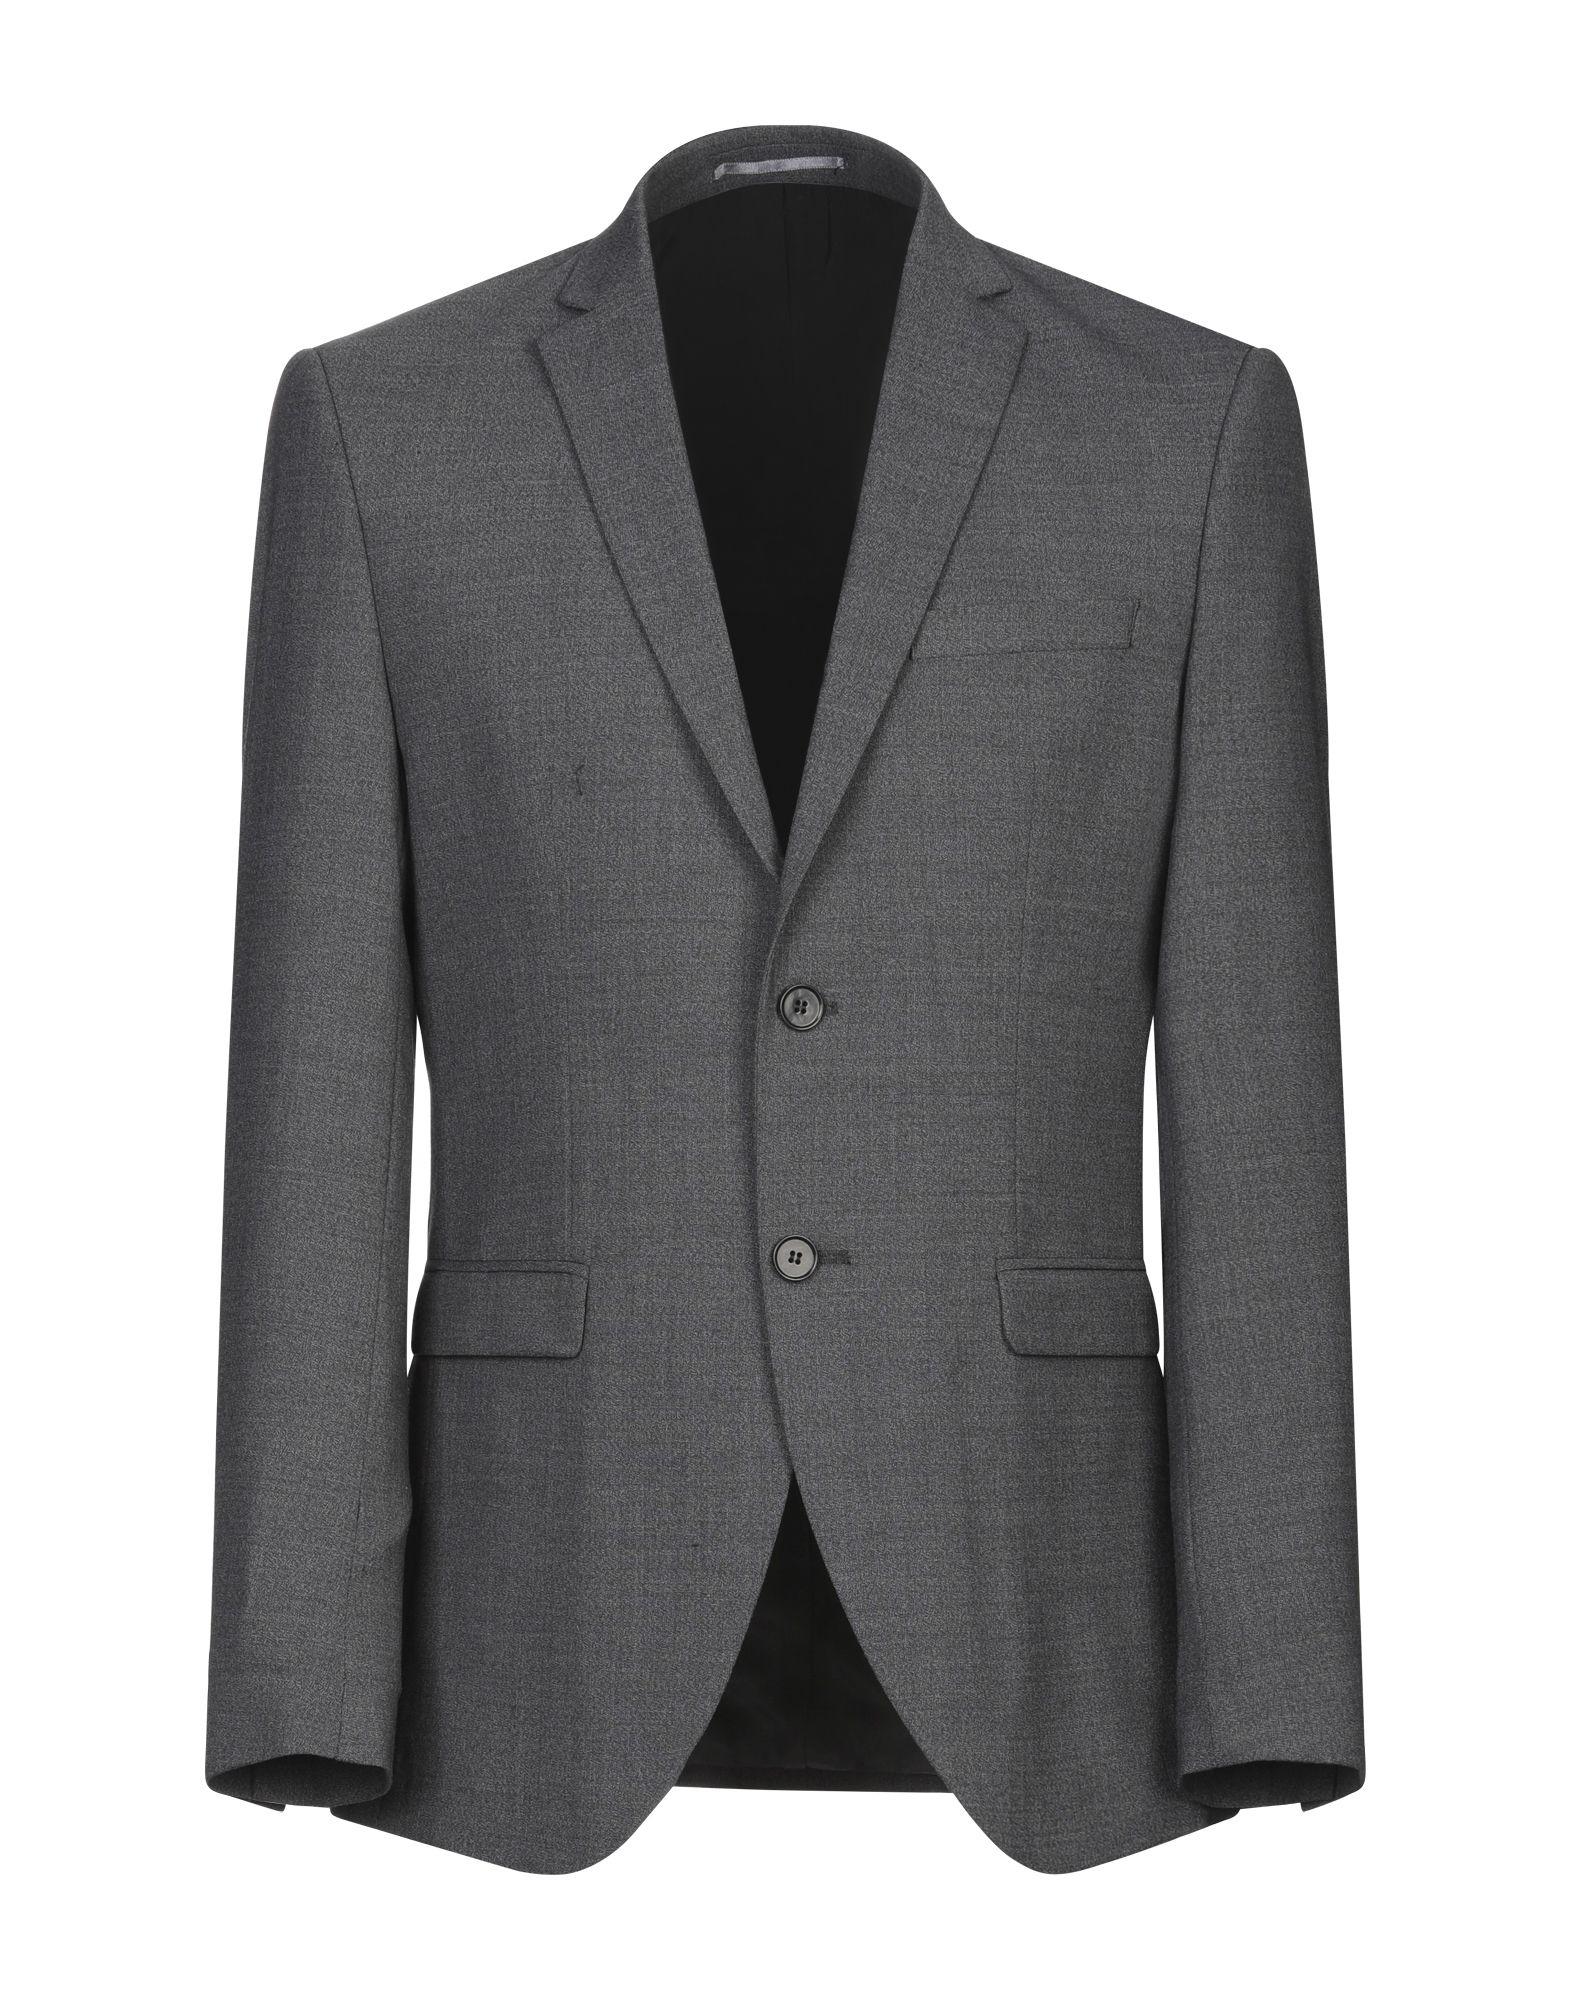 SELECTED Blazer in Gray for Men - Lyst